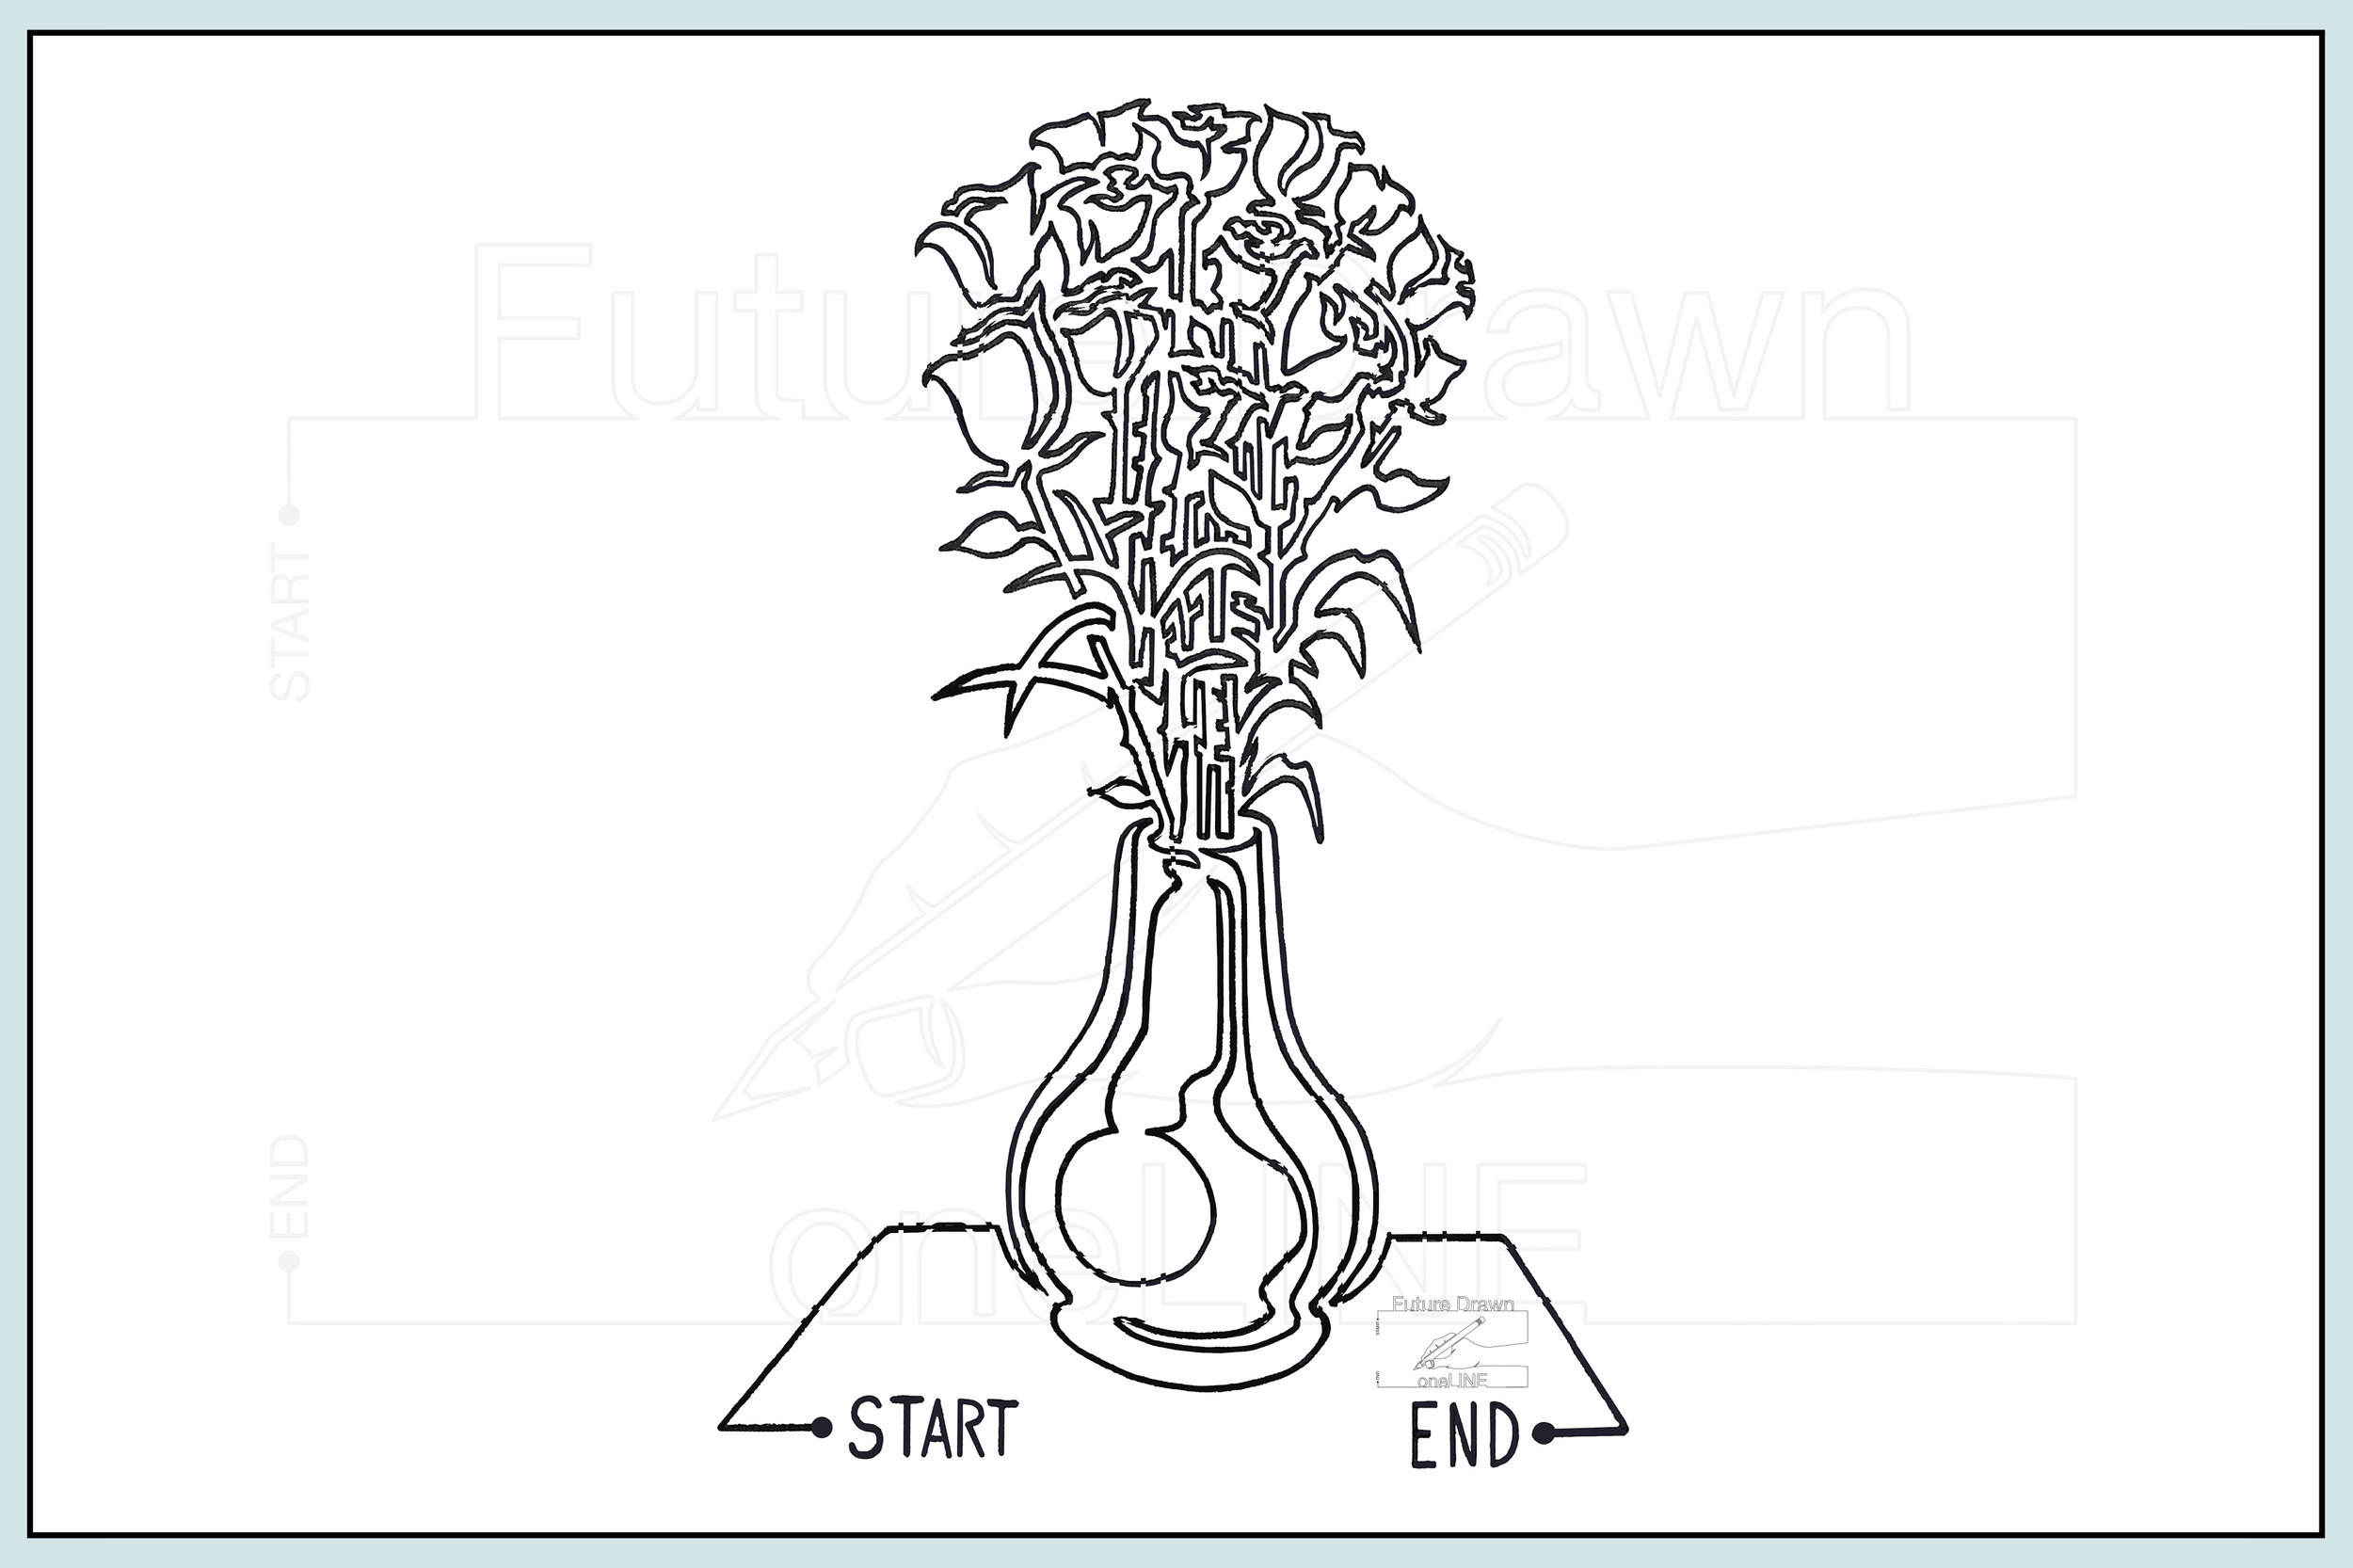 Web- one Small Vasse of roses- oneLINE Future Drawn Applegate.jpg